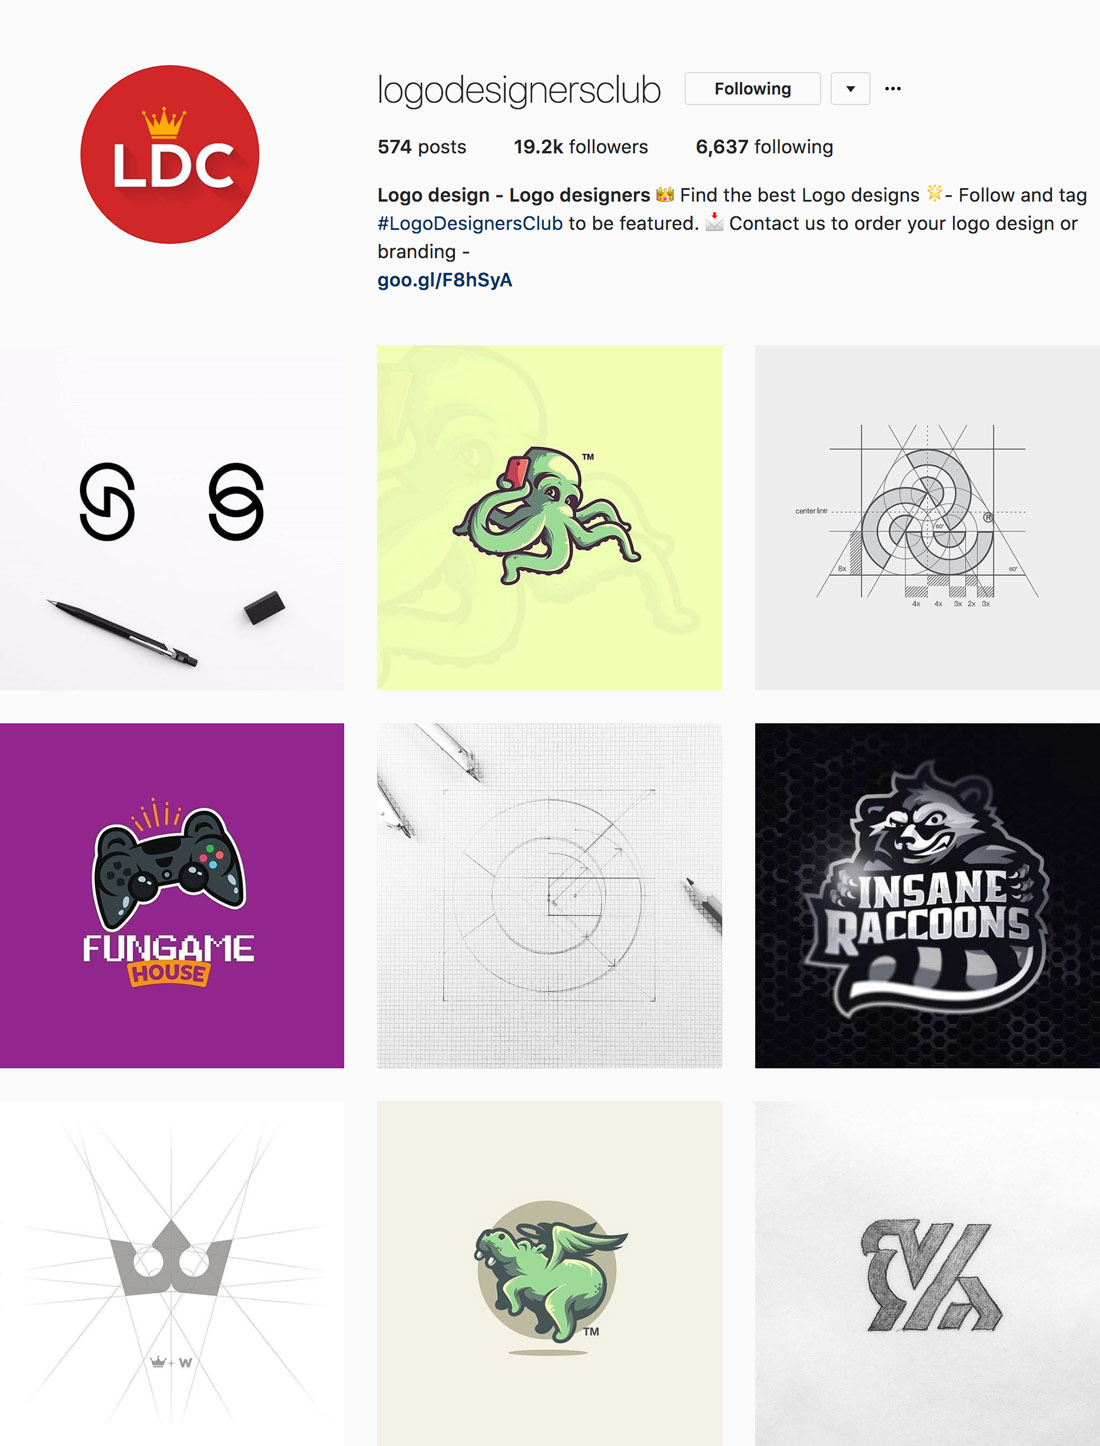 logodesignersclub on Instagram